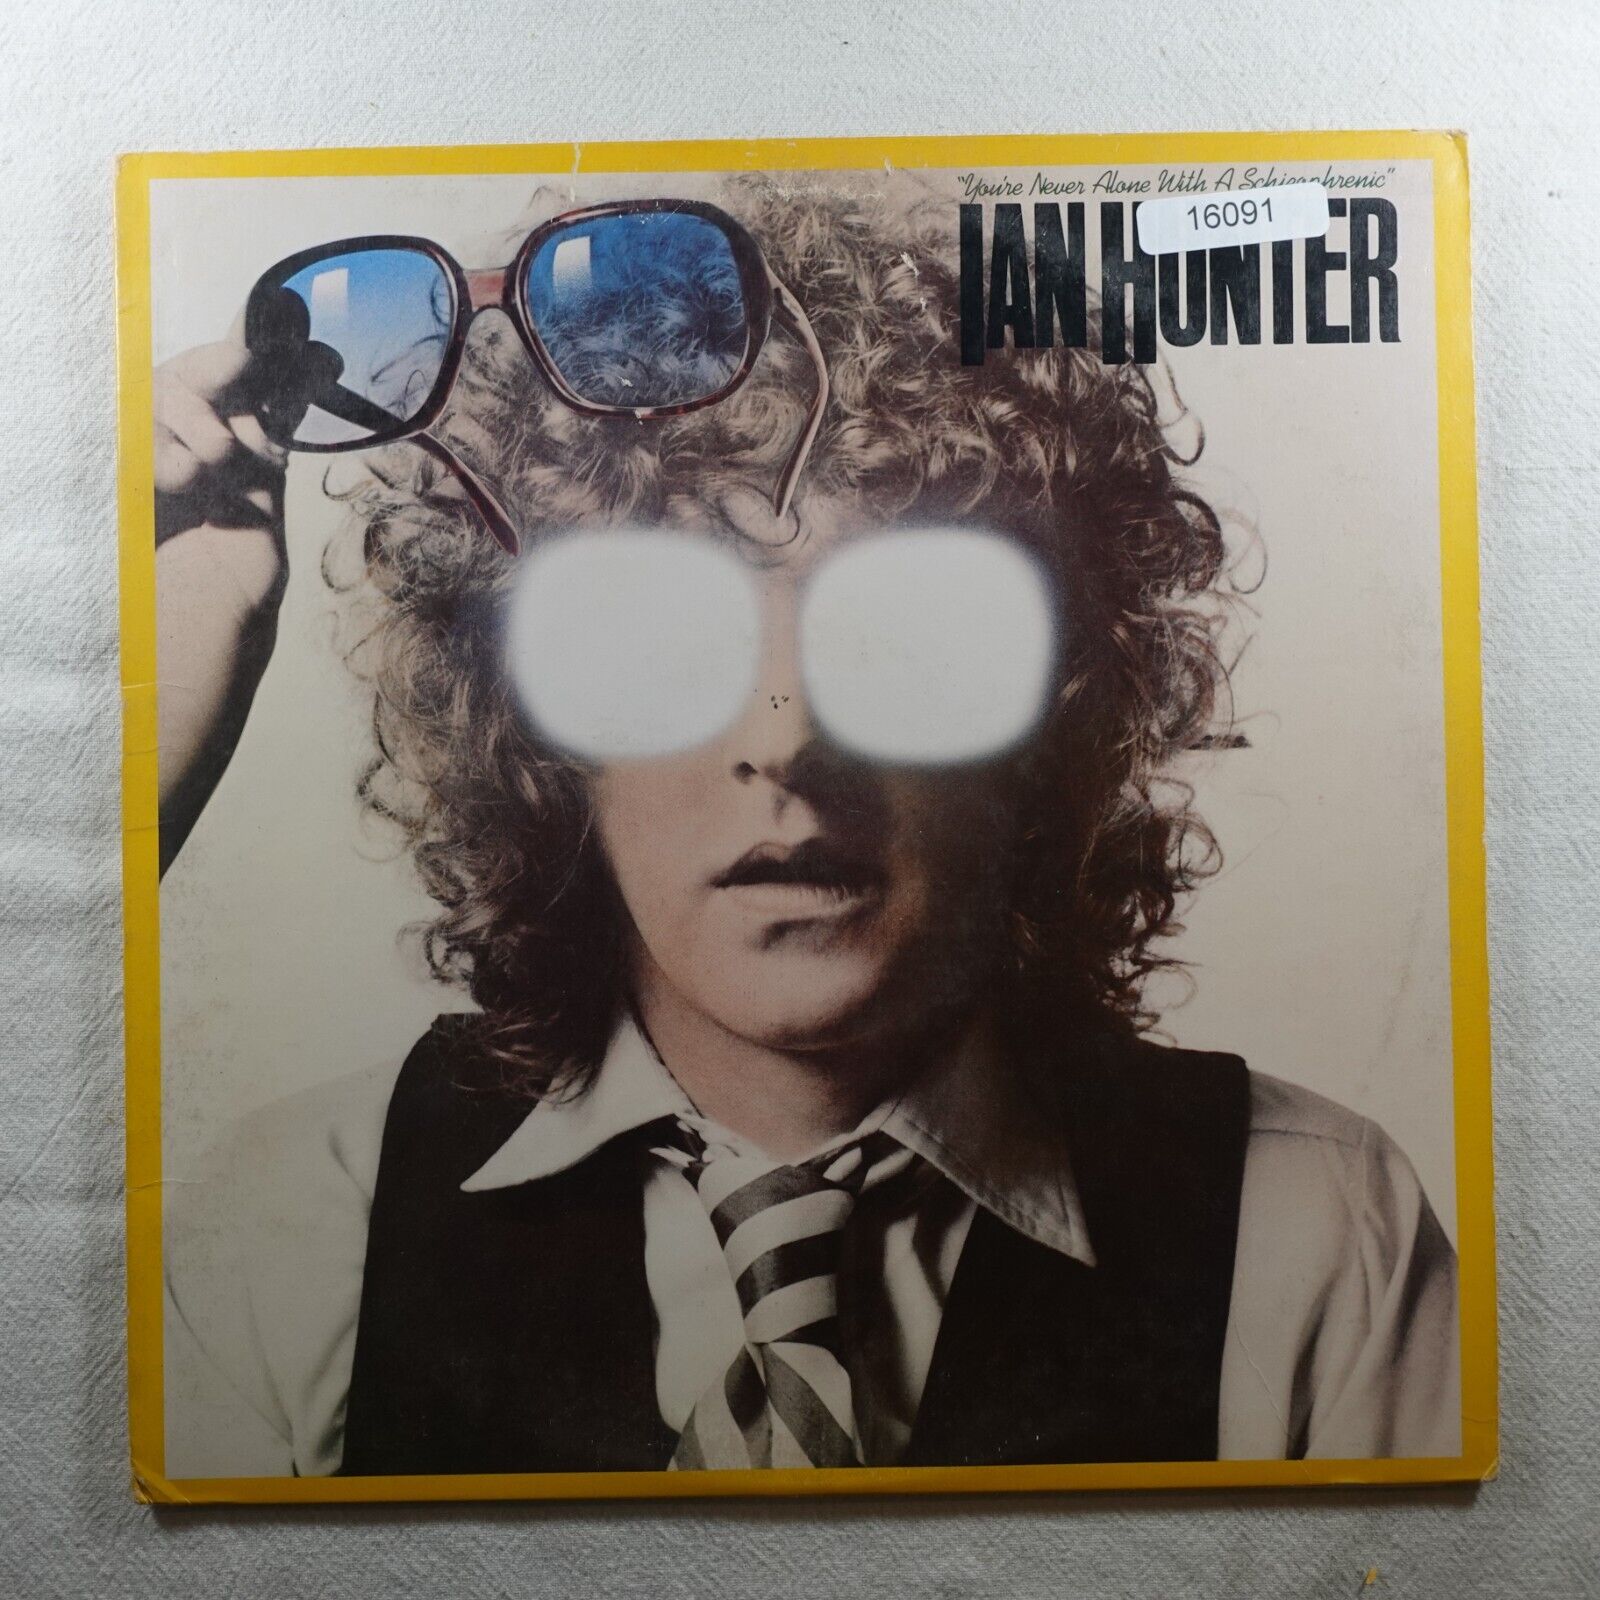 Ian Hunter You\'Re Never Alone With A Schizophrenic   Record Album Vinyl LP